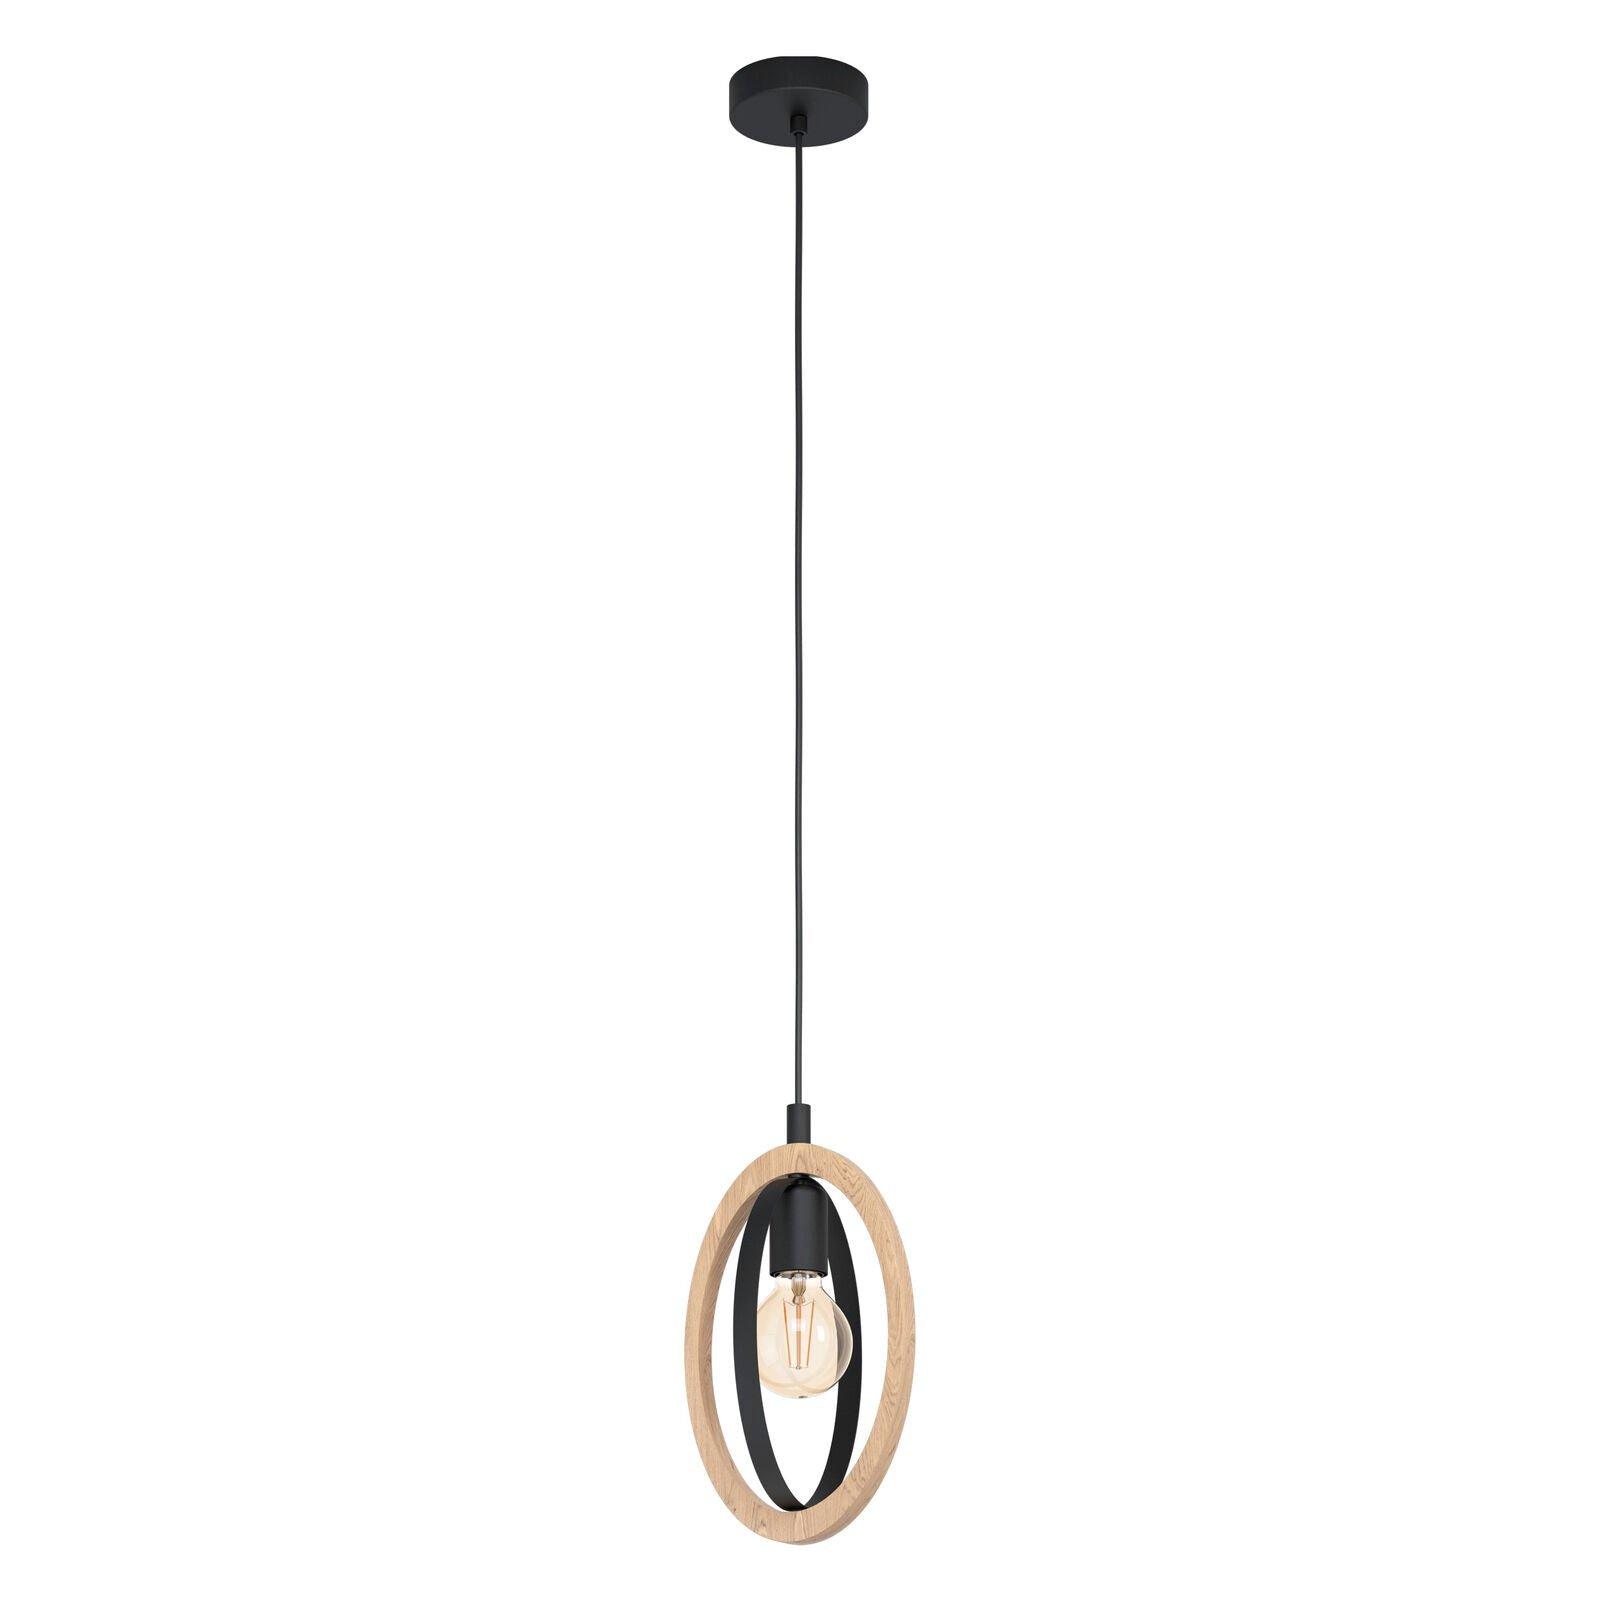 Hanging Ceiling Pendant Light Black & Wood Hoop Shade 1 x 40W E27 Bulb